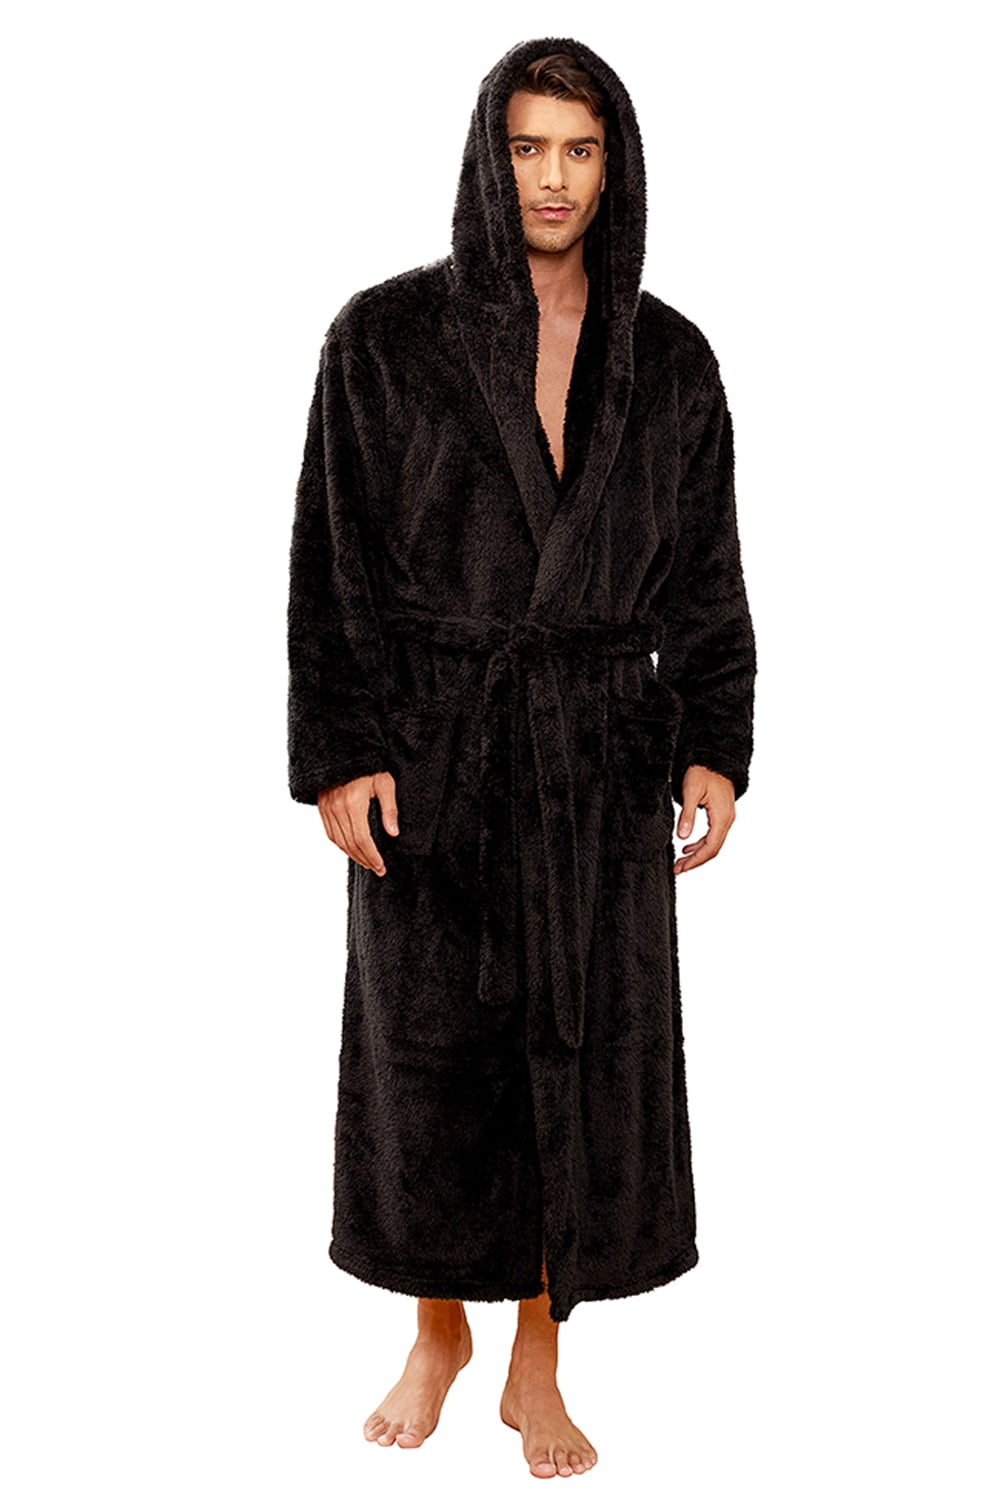 VULCANODON Mens Robe Big and Tall with Hood,Full Length Plush Robe for ...